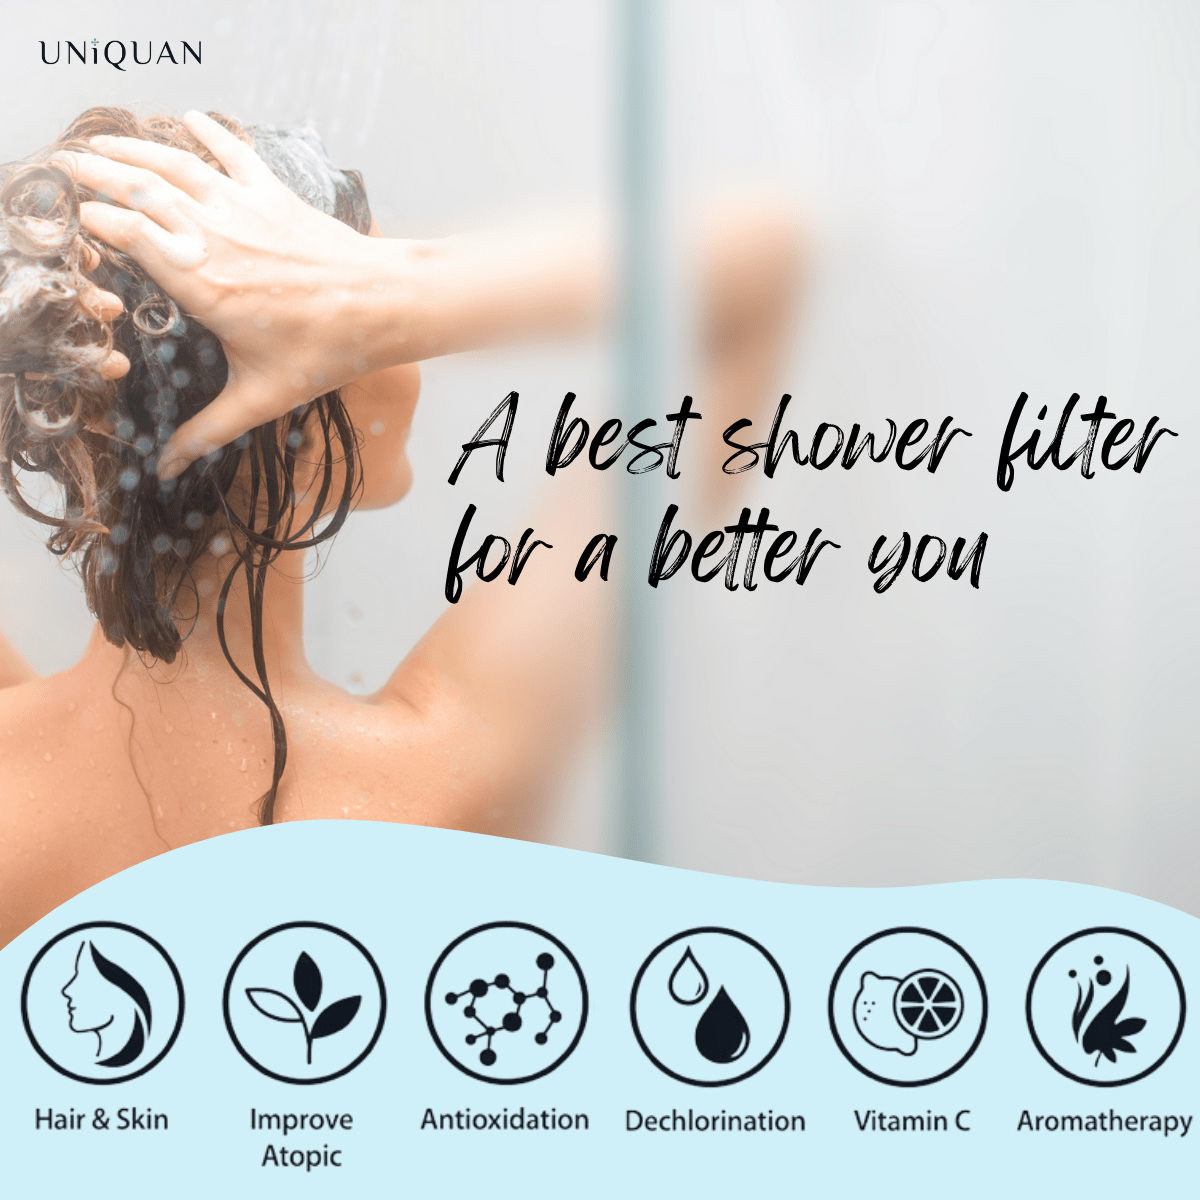 Uniquan Vitamin Shower Filter - Aqua Blue Lemon - UShops, Aromatherapy, High-efficiency Filter, Skin & Hair Health